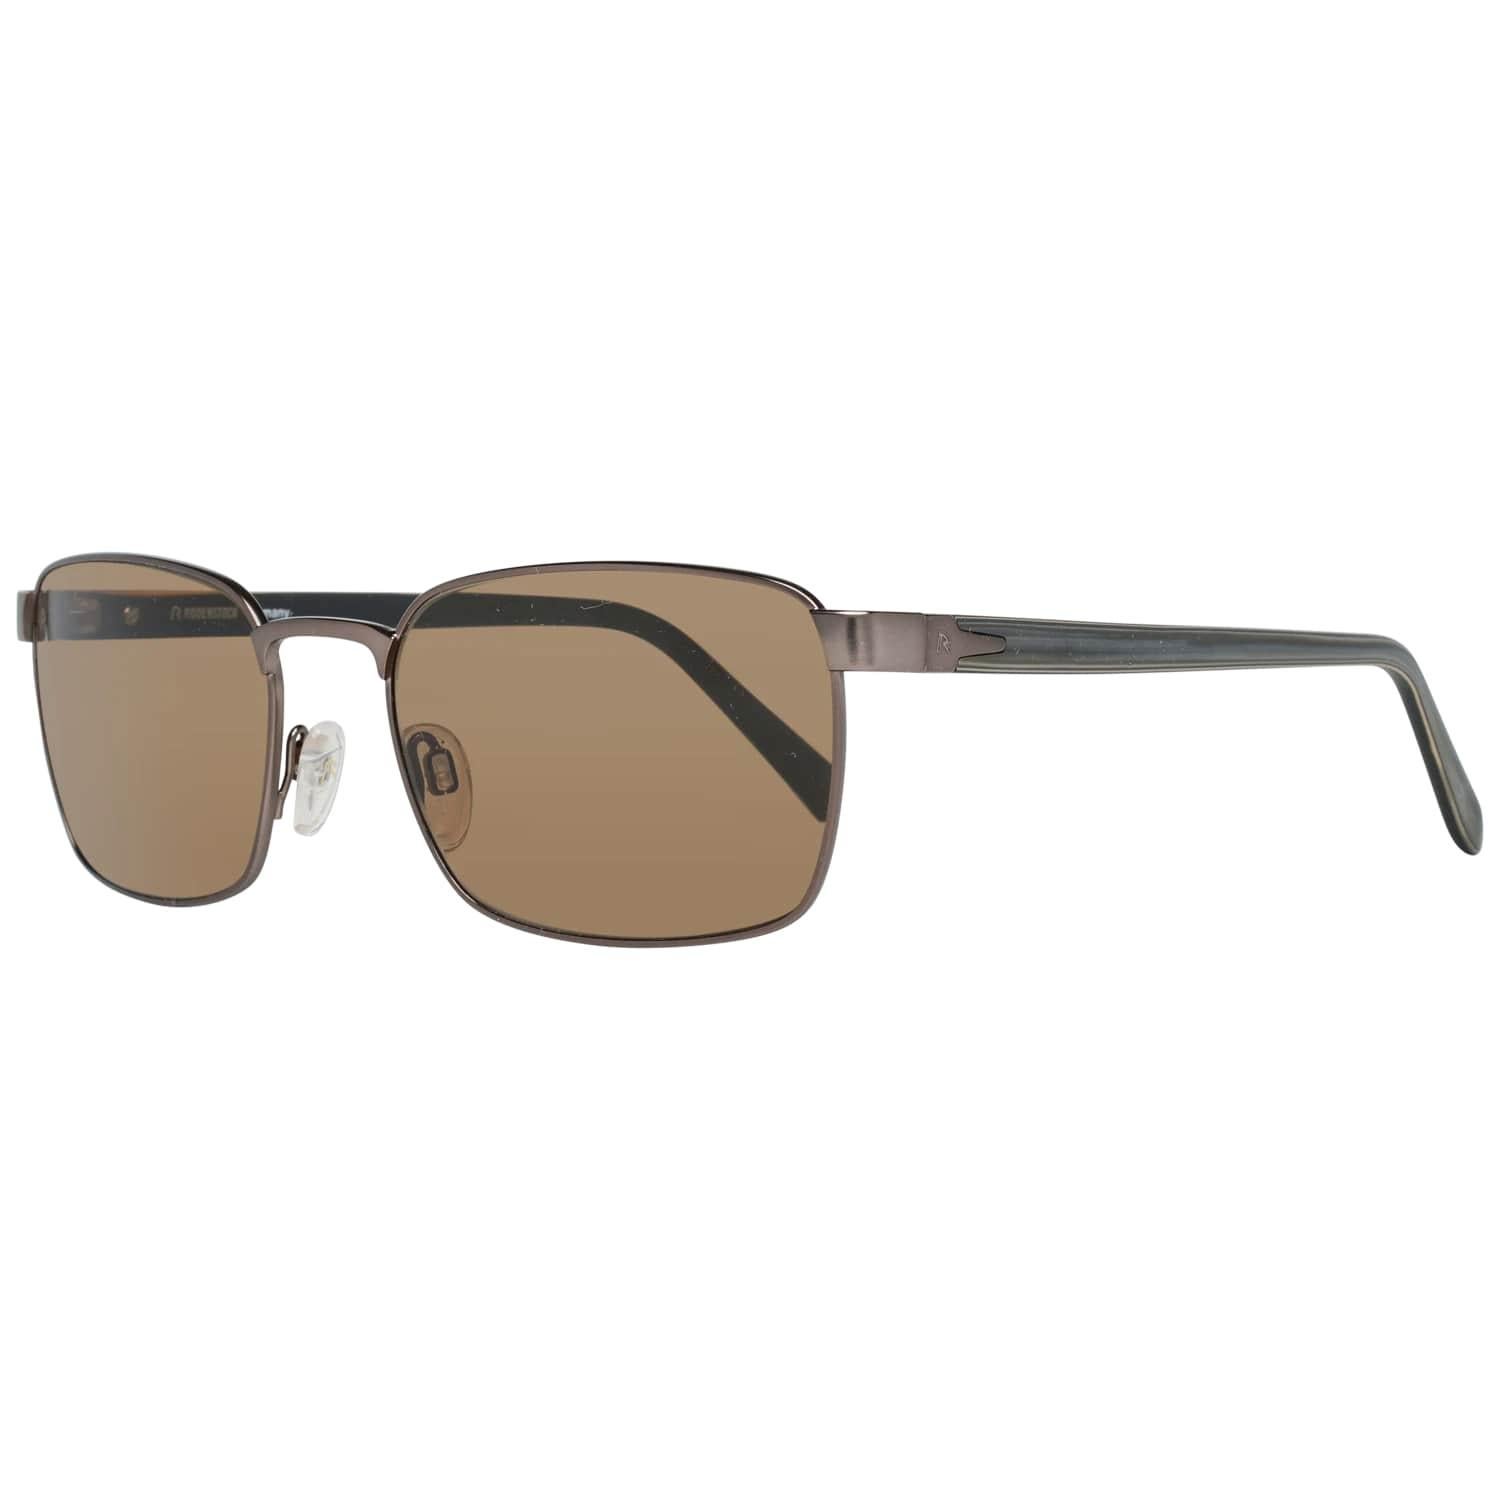 Rodenstock Mint Unisex Brown Sunglasses R1417 B 56 56-19-139 mm 2